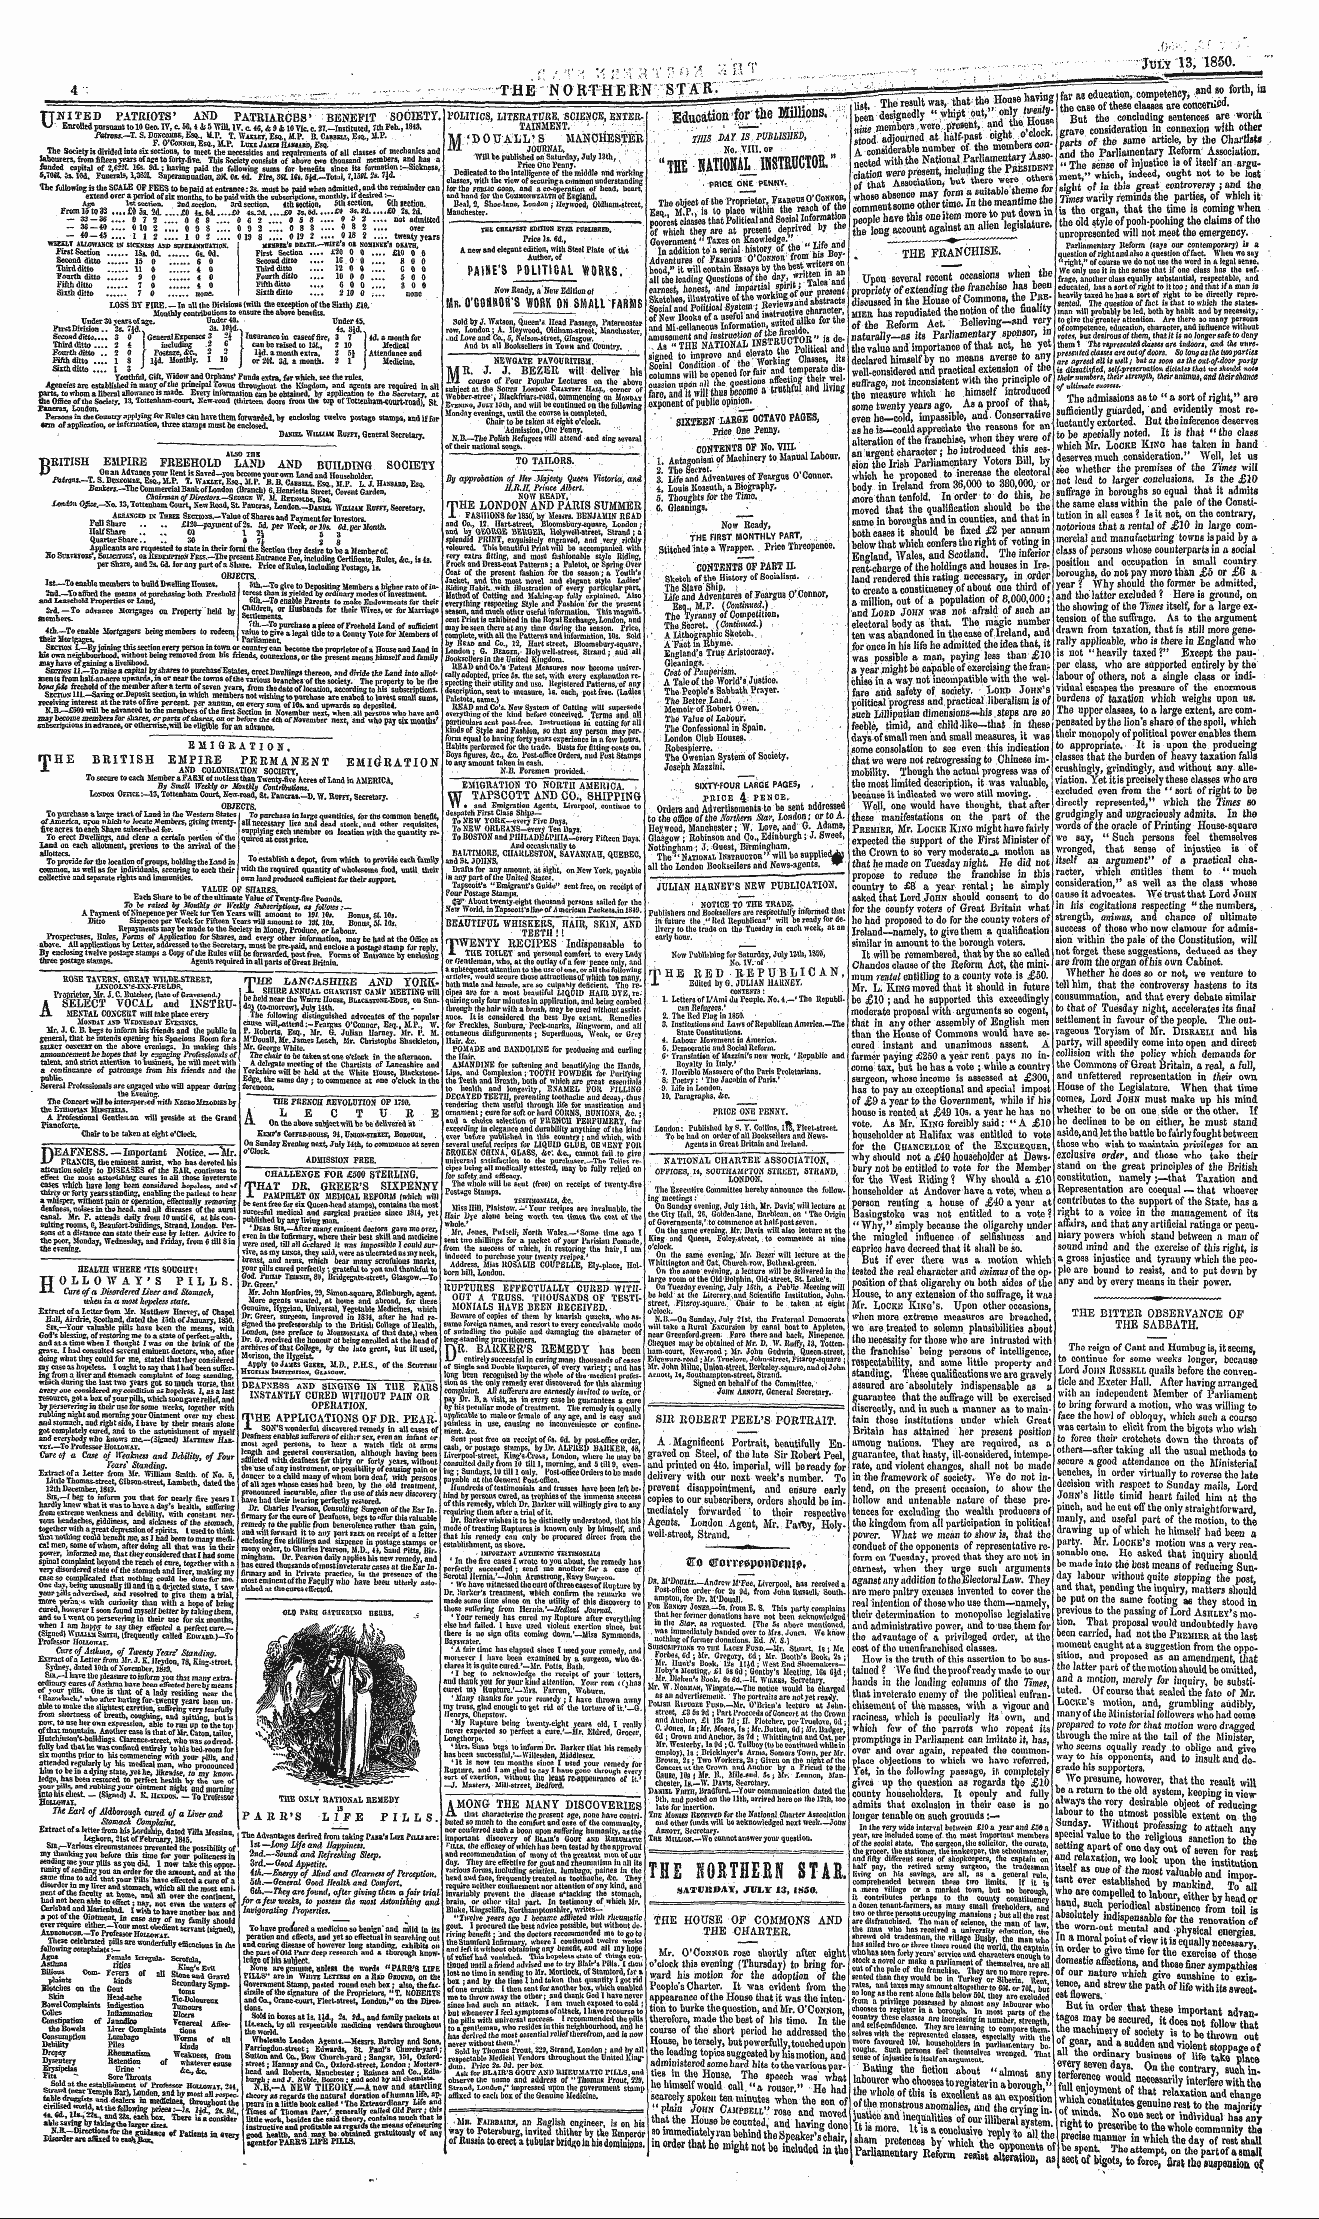 Northern Star (1837-1852): jS F Y, 3rd edition - Ad00428